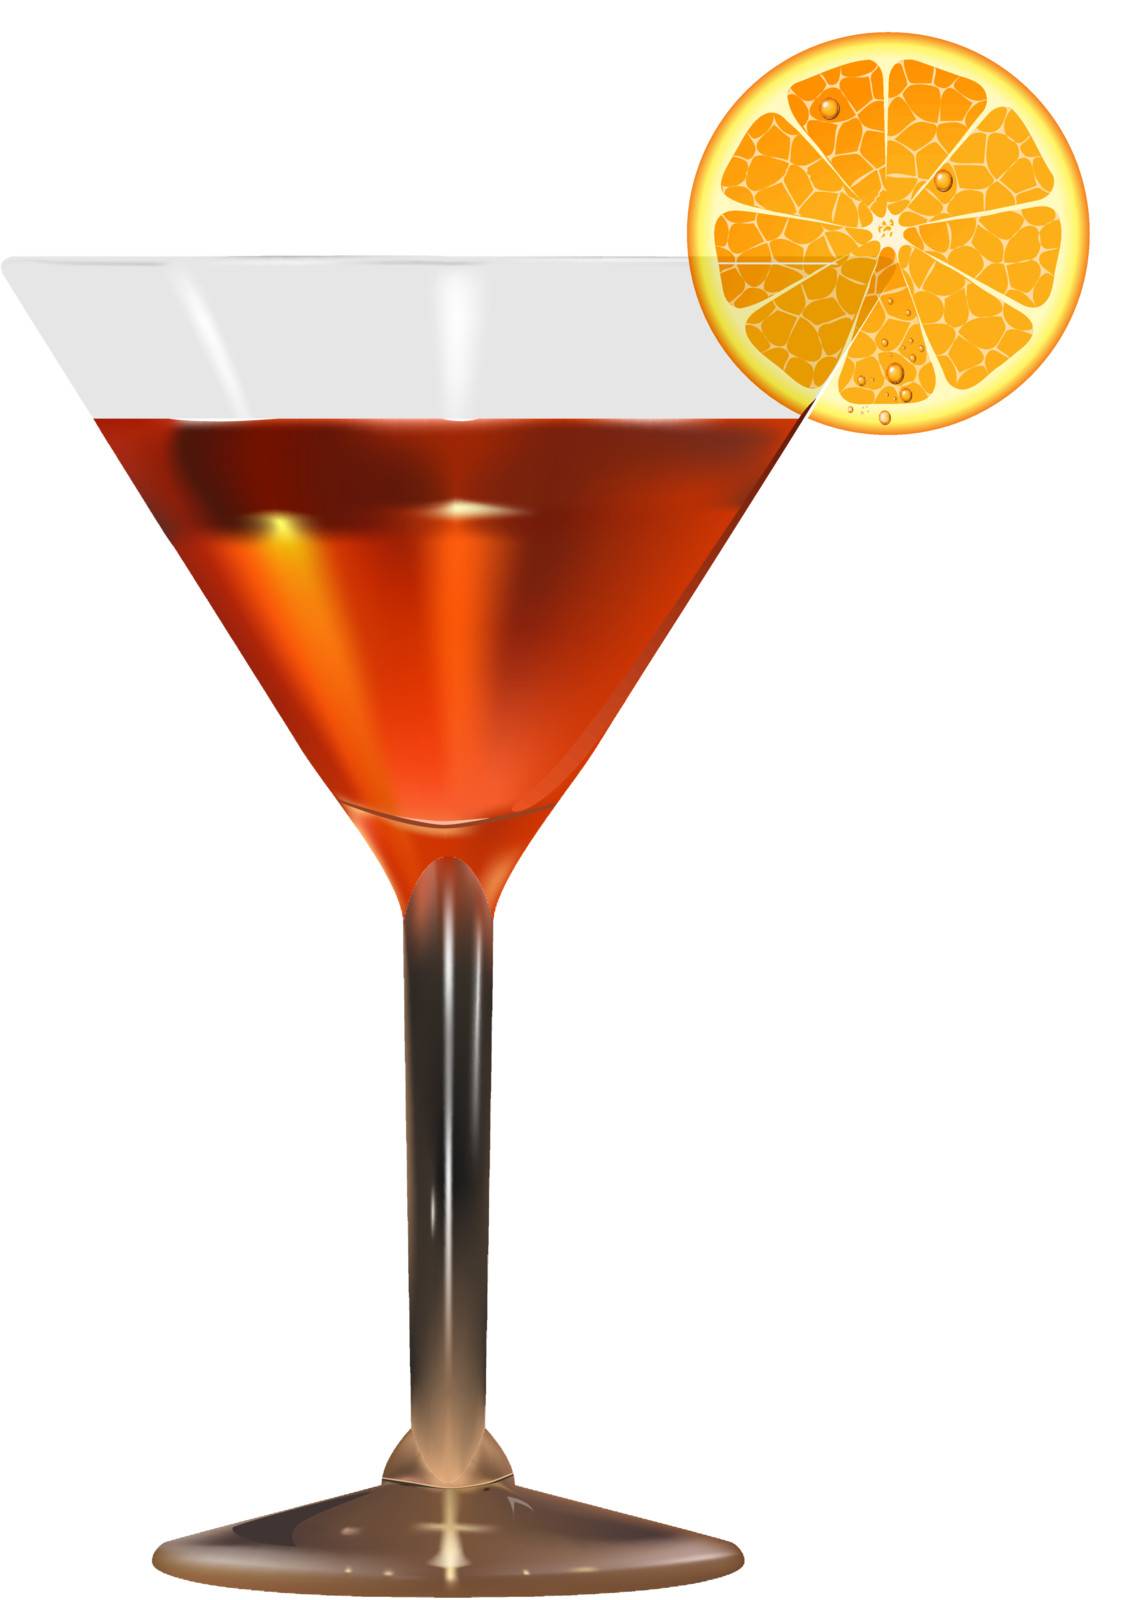 	photo realistic cocktail illustration on white background